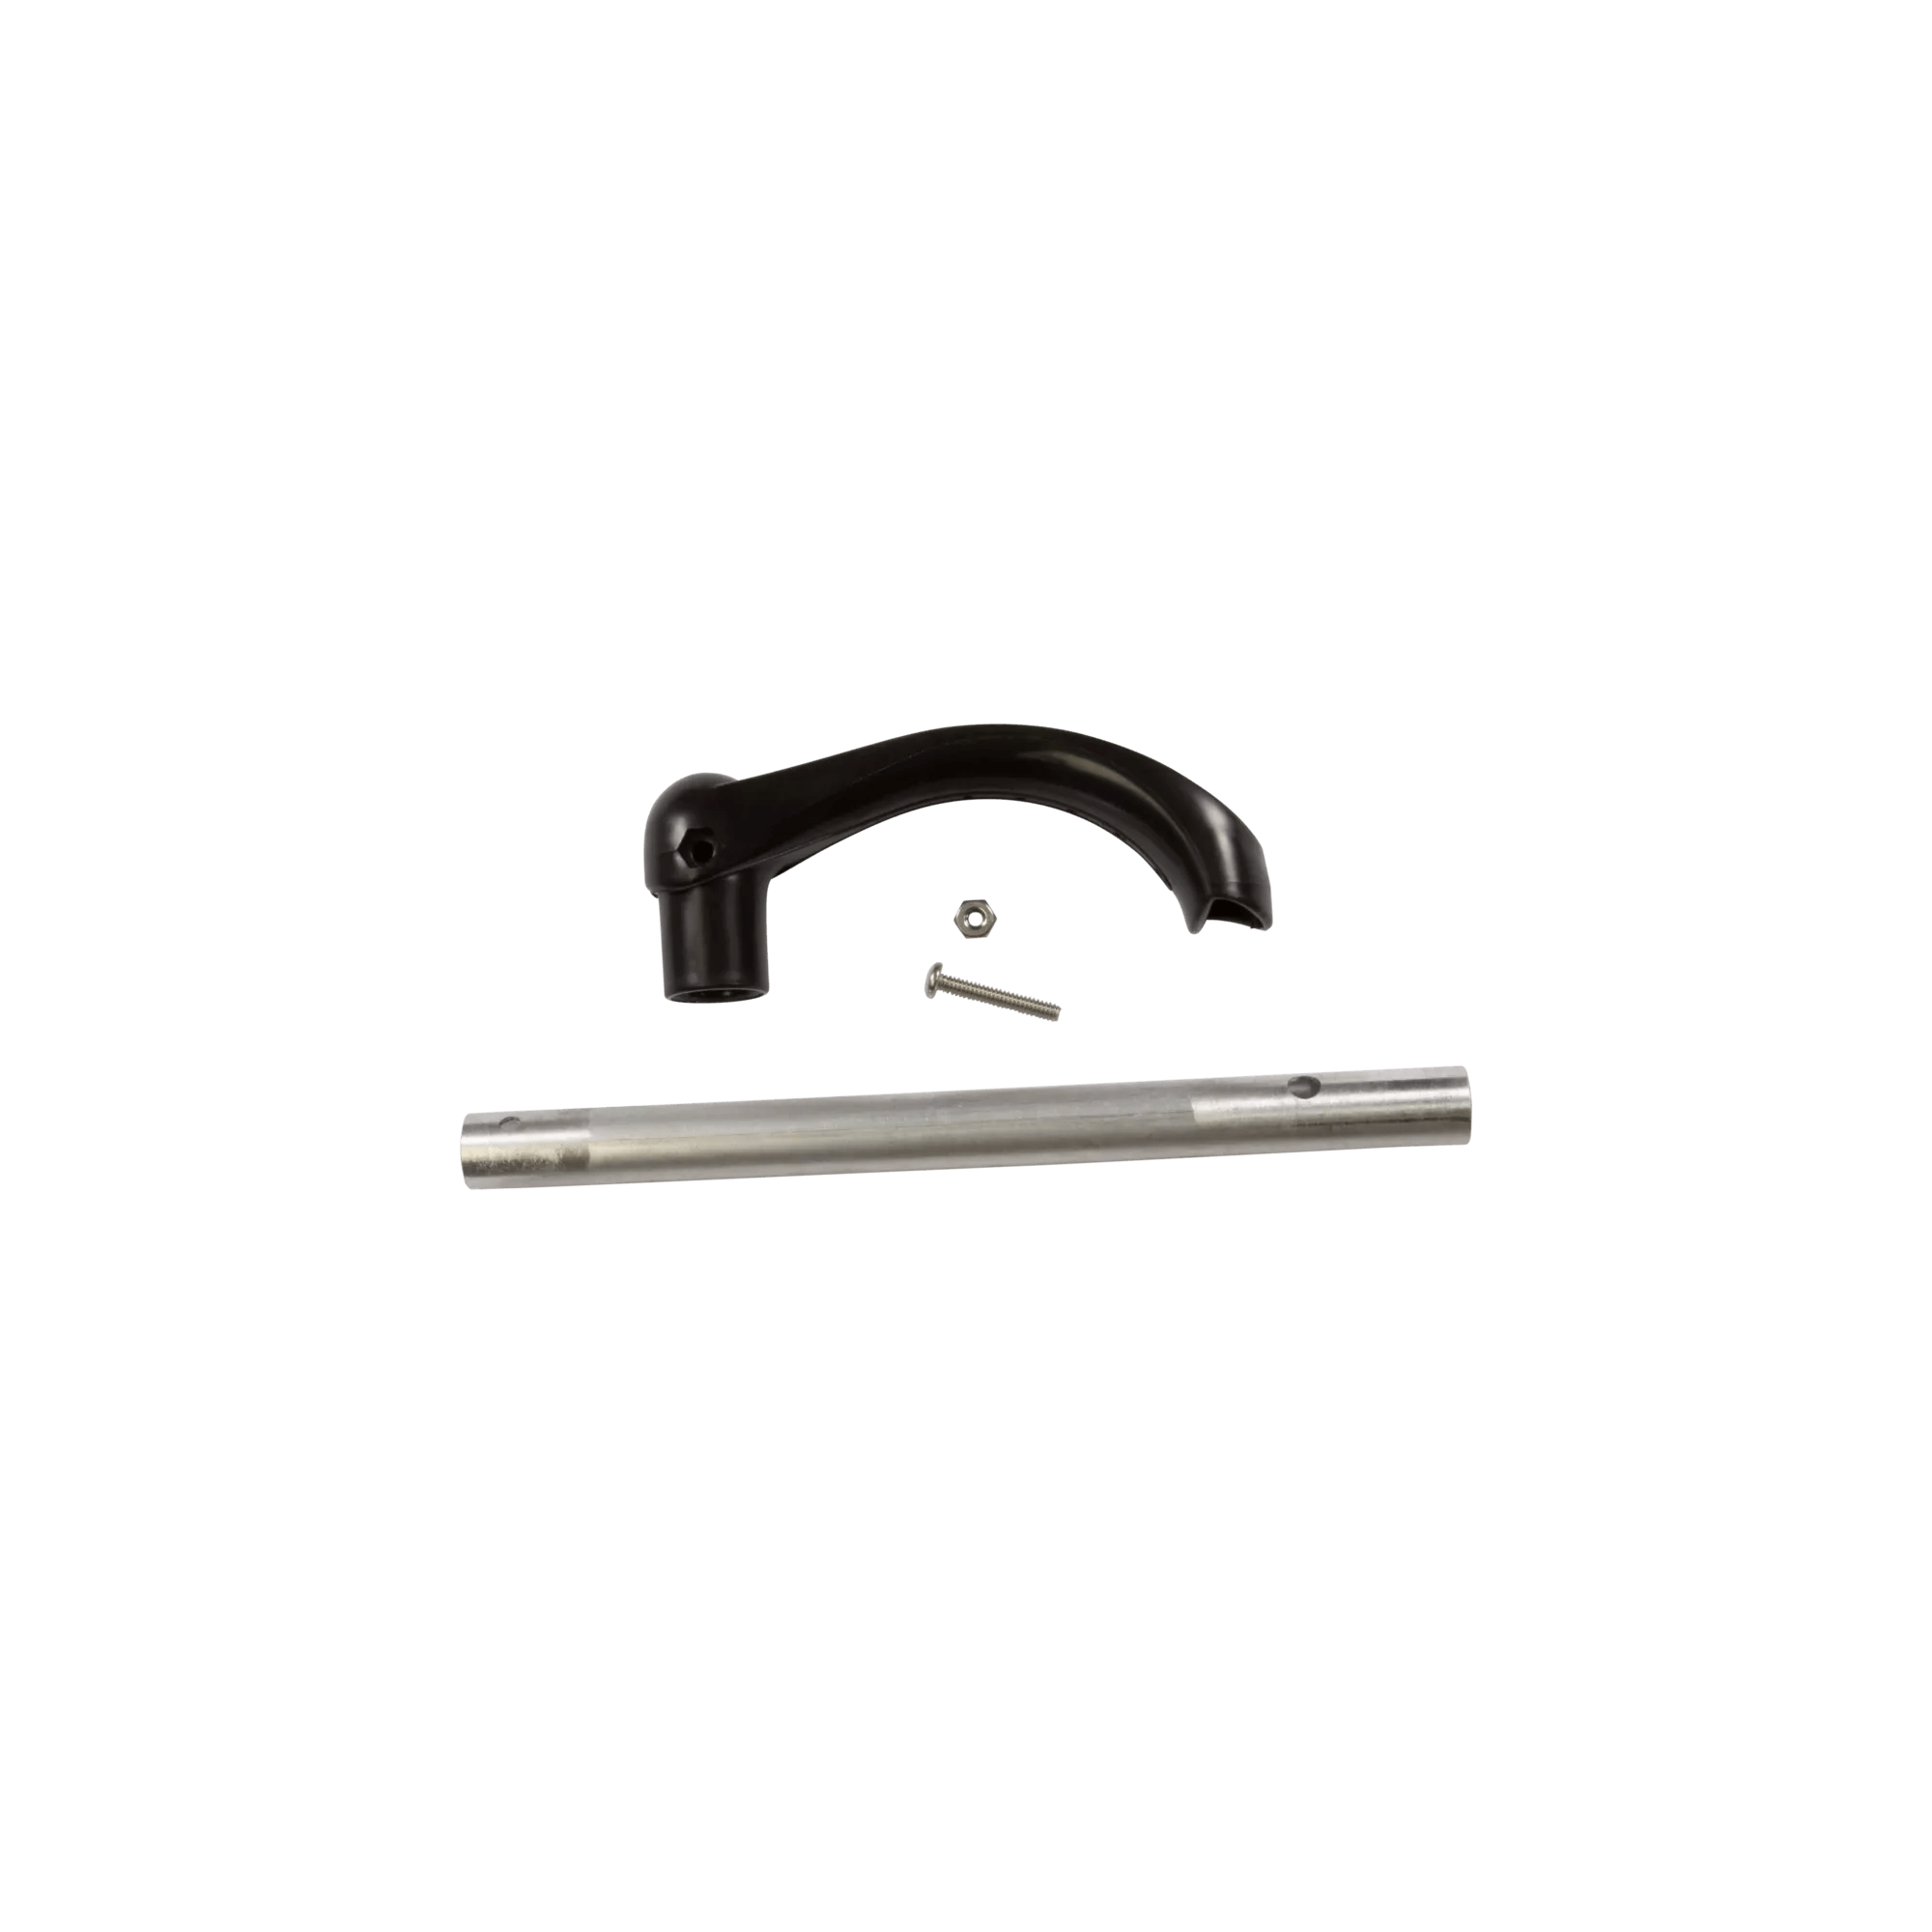 PELICAN - Pedal Boat Steering Kit in Black -  - PS0638 - ISO 